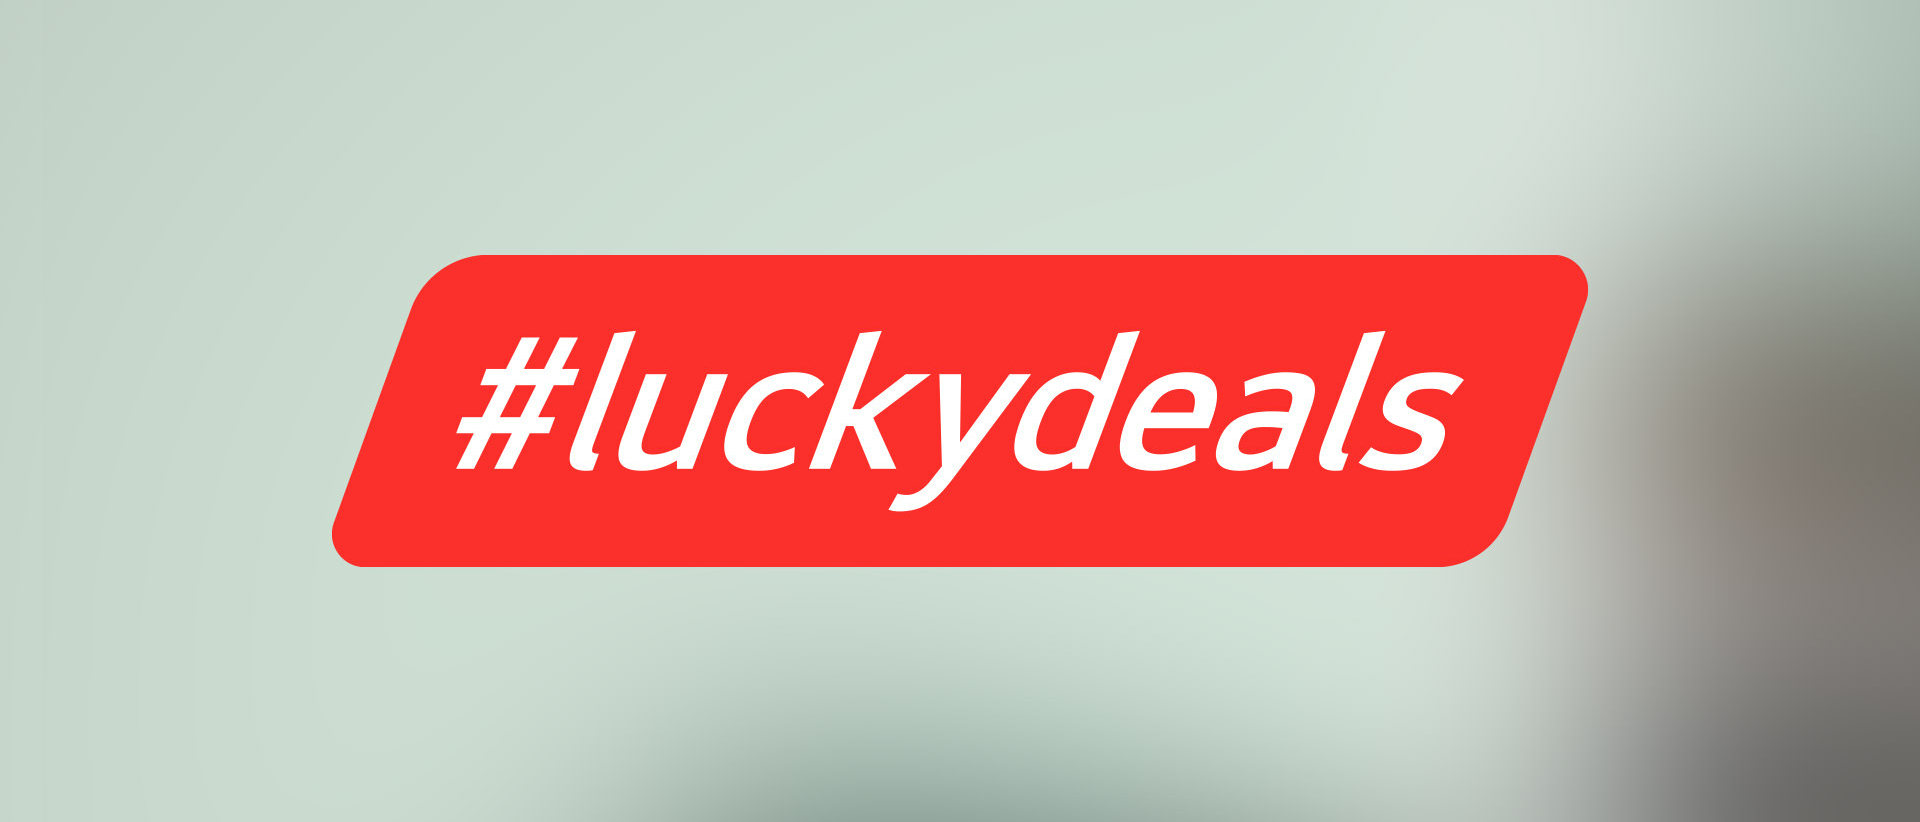 LG Cashback Promotions/LuckyDeals Header